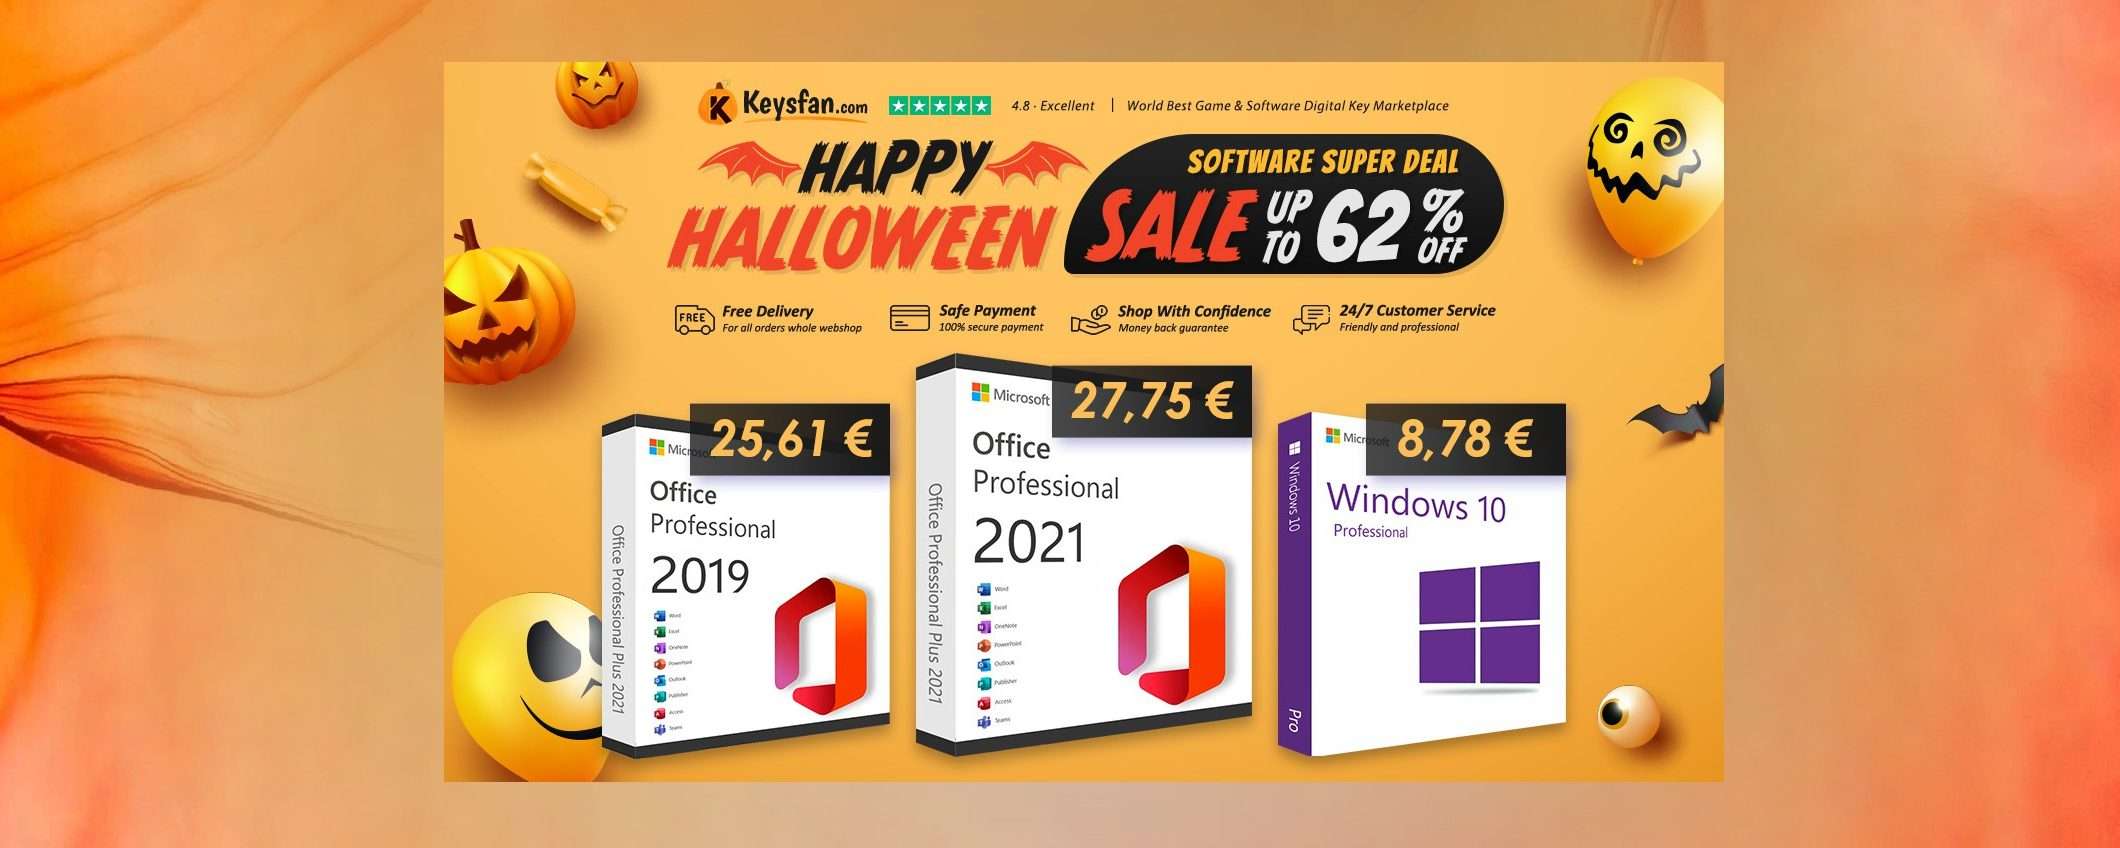 Festeggia Halloween: Office 2021 Professional a vita per 27,75€ su Keysfan